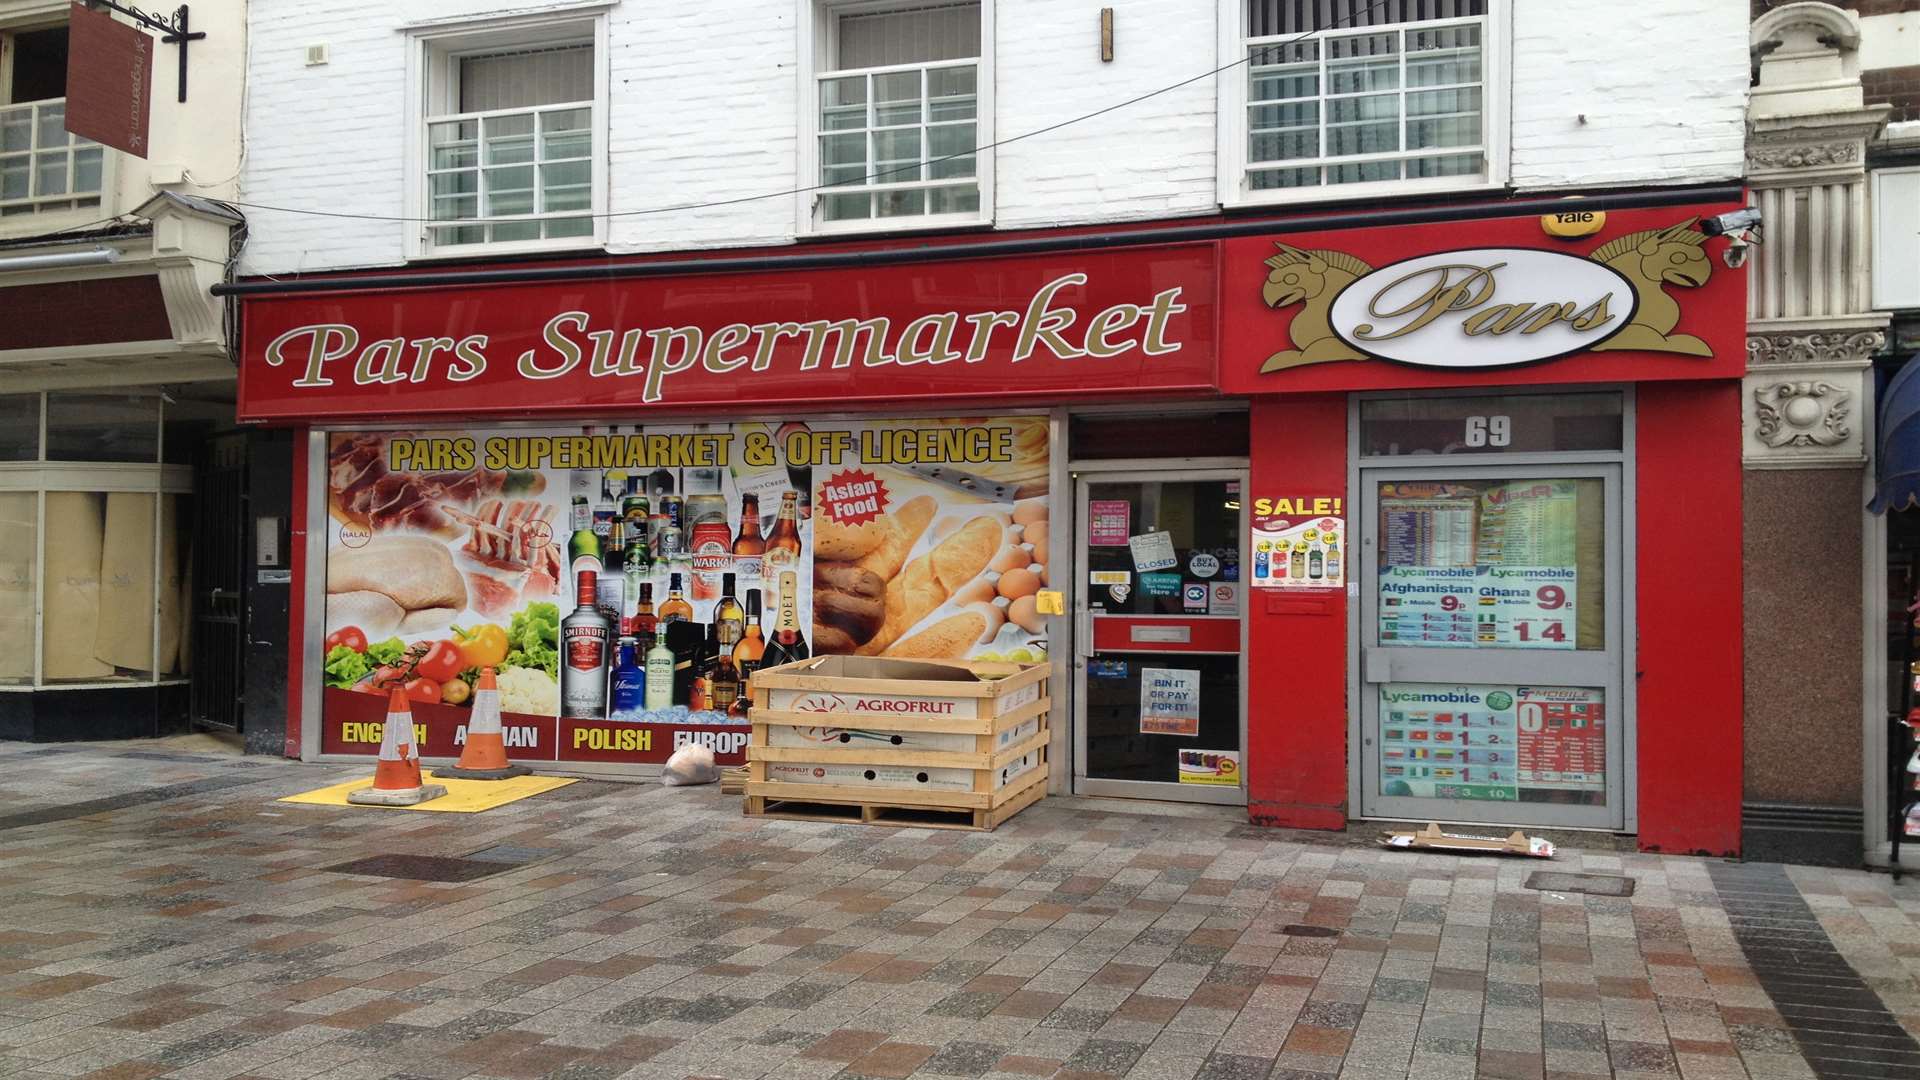 Pars Supermarket in Maidstone